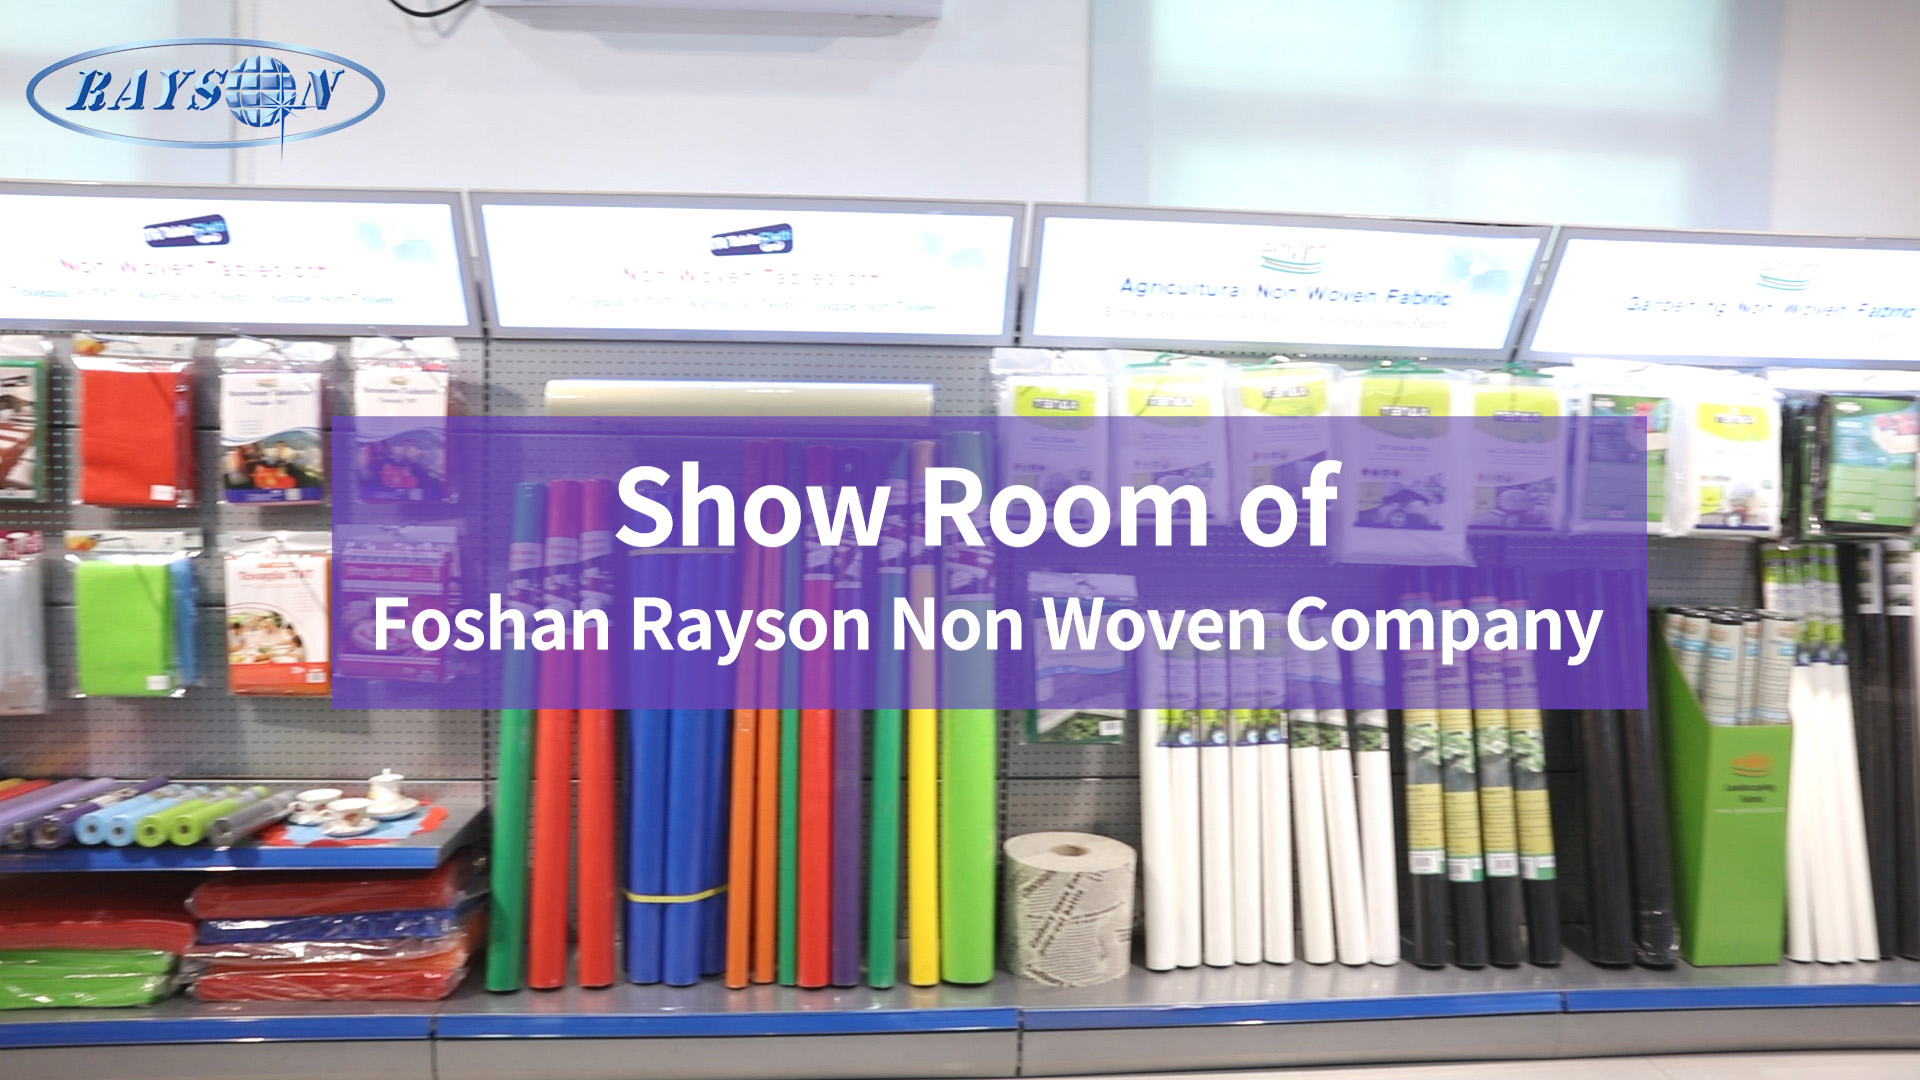 Product range of Rayson Non Woven Company